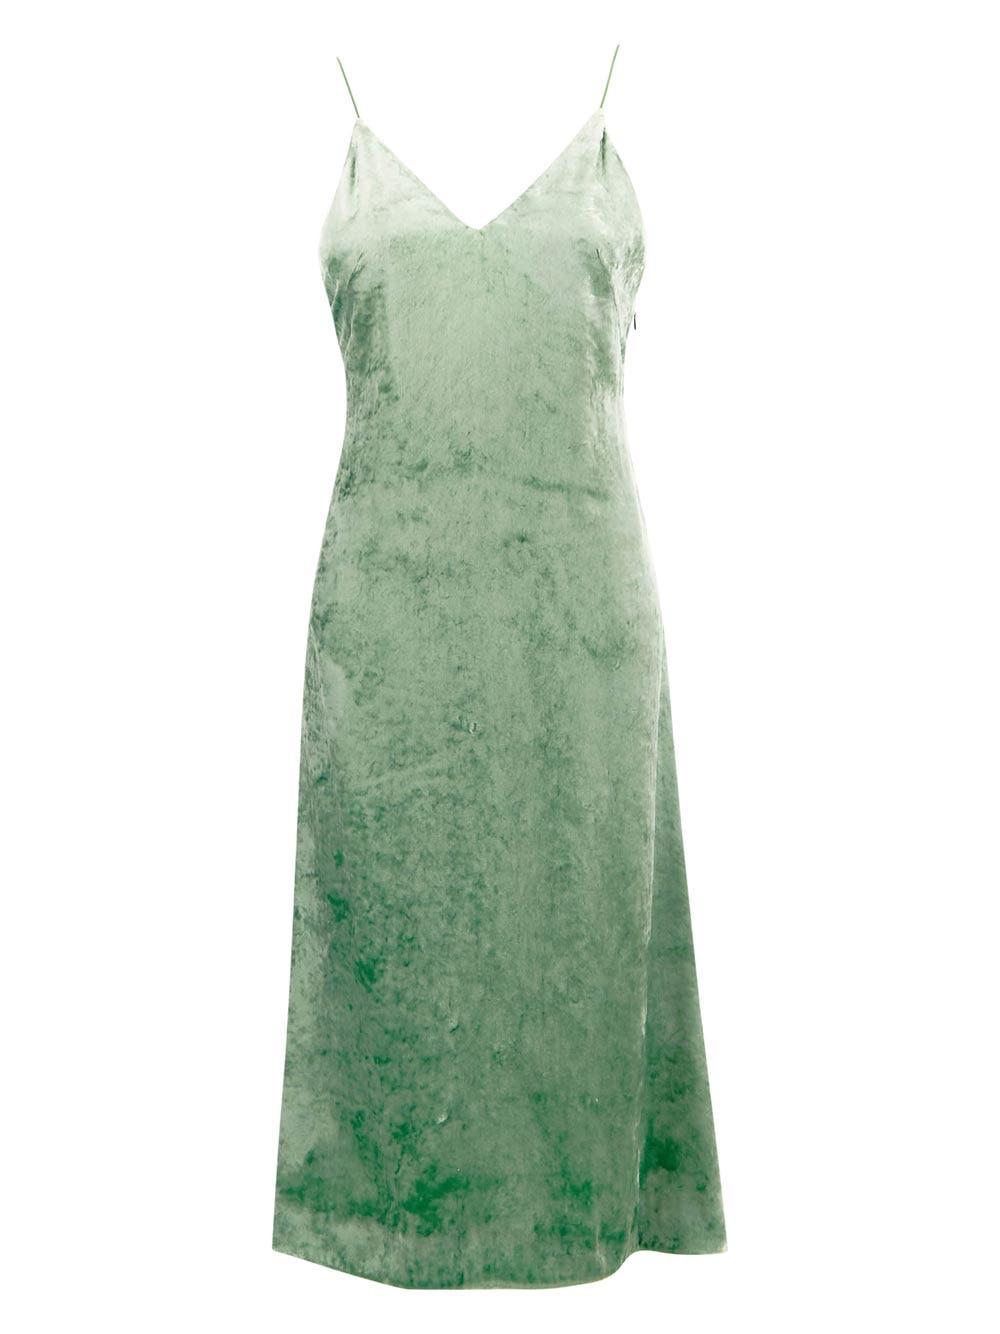 Jil Sander Washed Velvet Dress in Green | Lyst